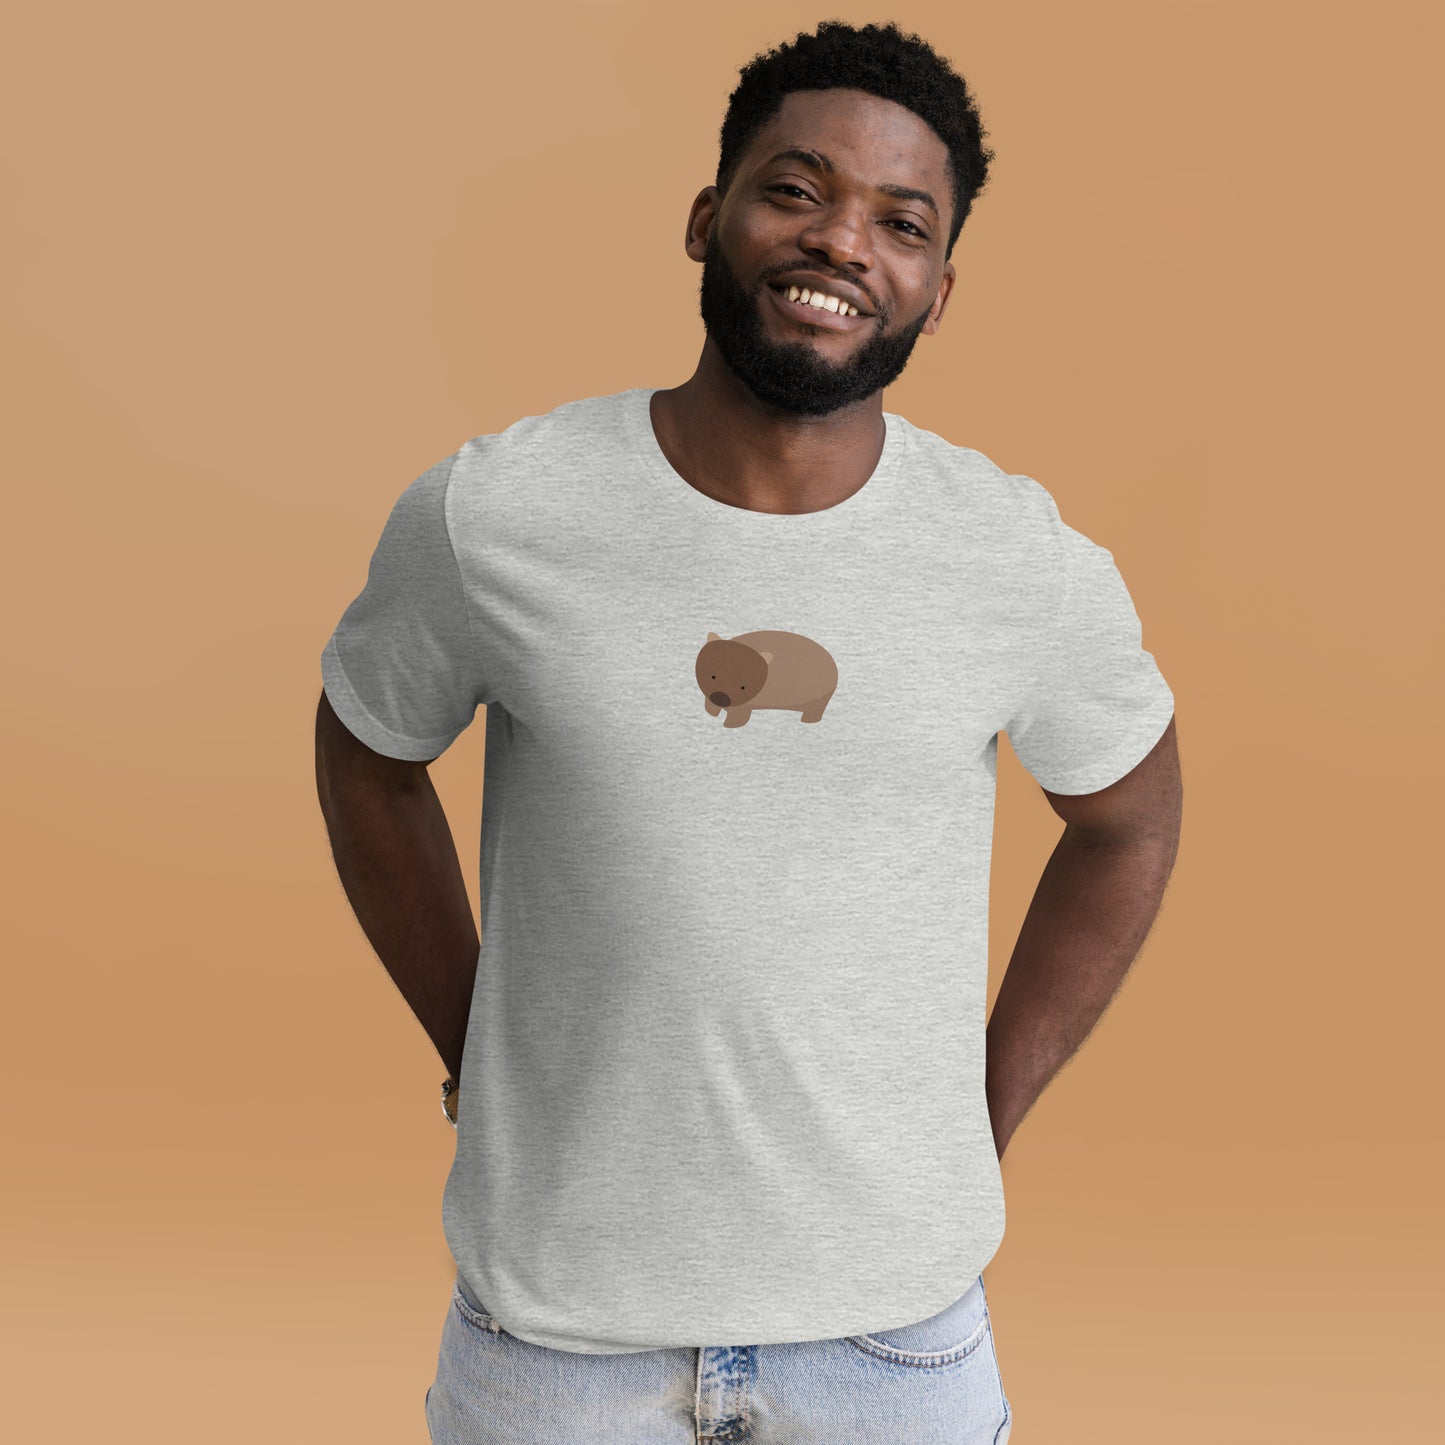 Bella + Canvas Unisex T-shirt with Wombat design